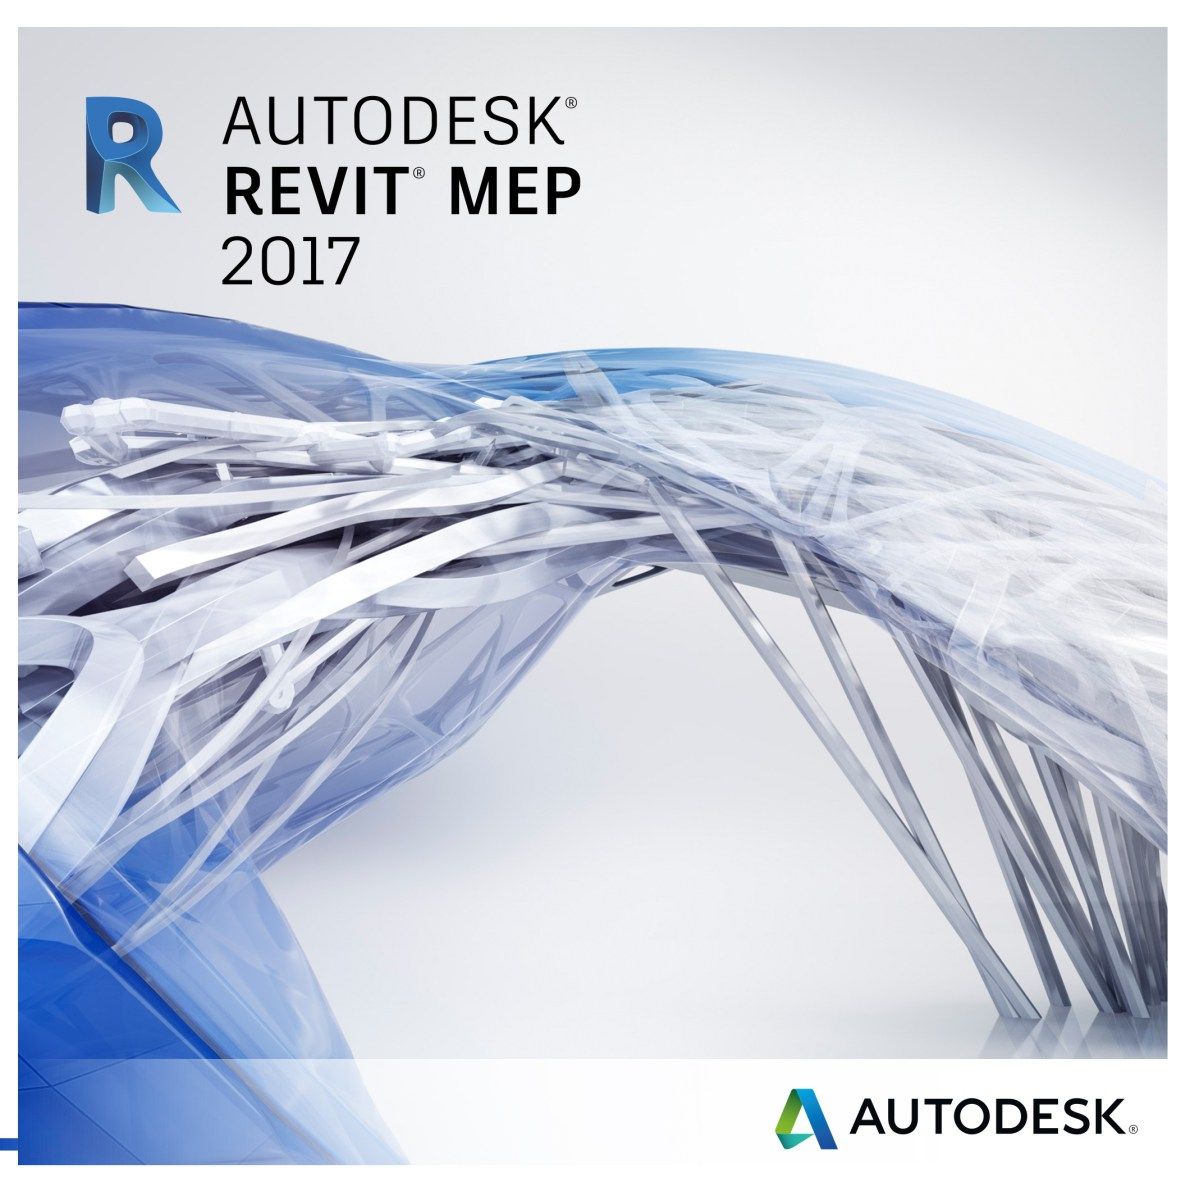 Autodesk Revit 2014 With Crack